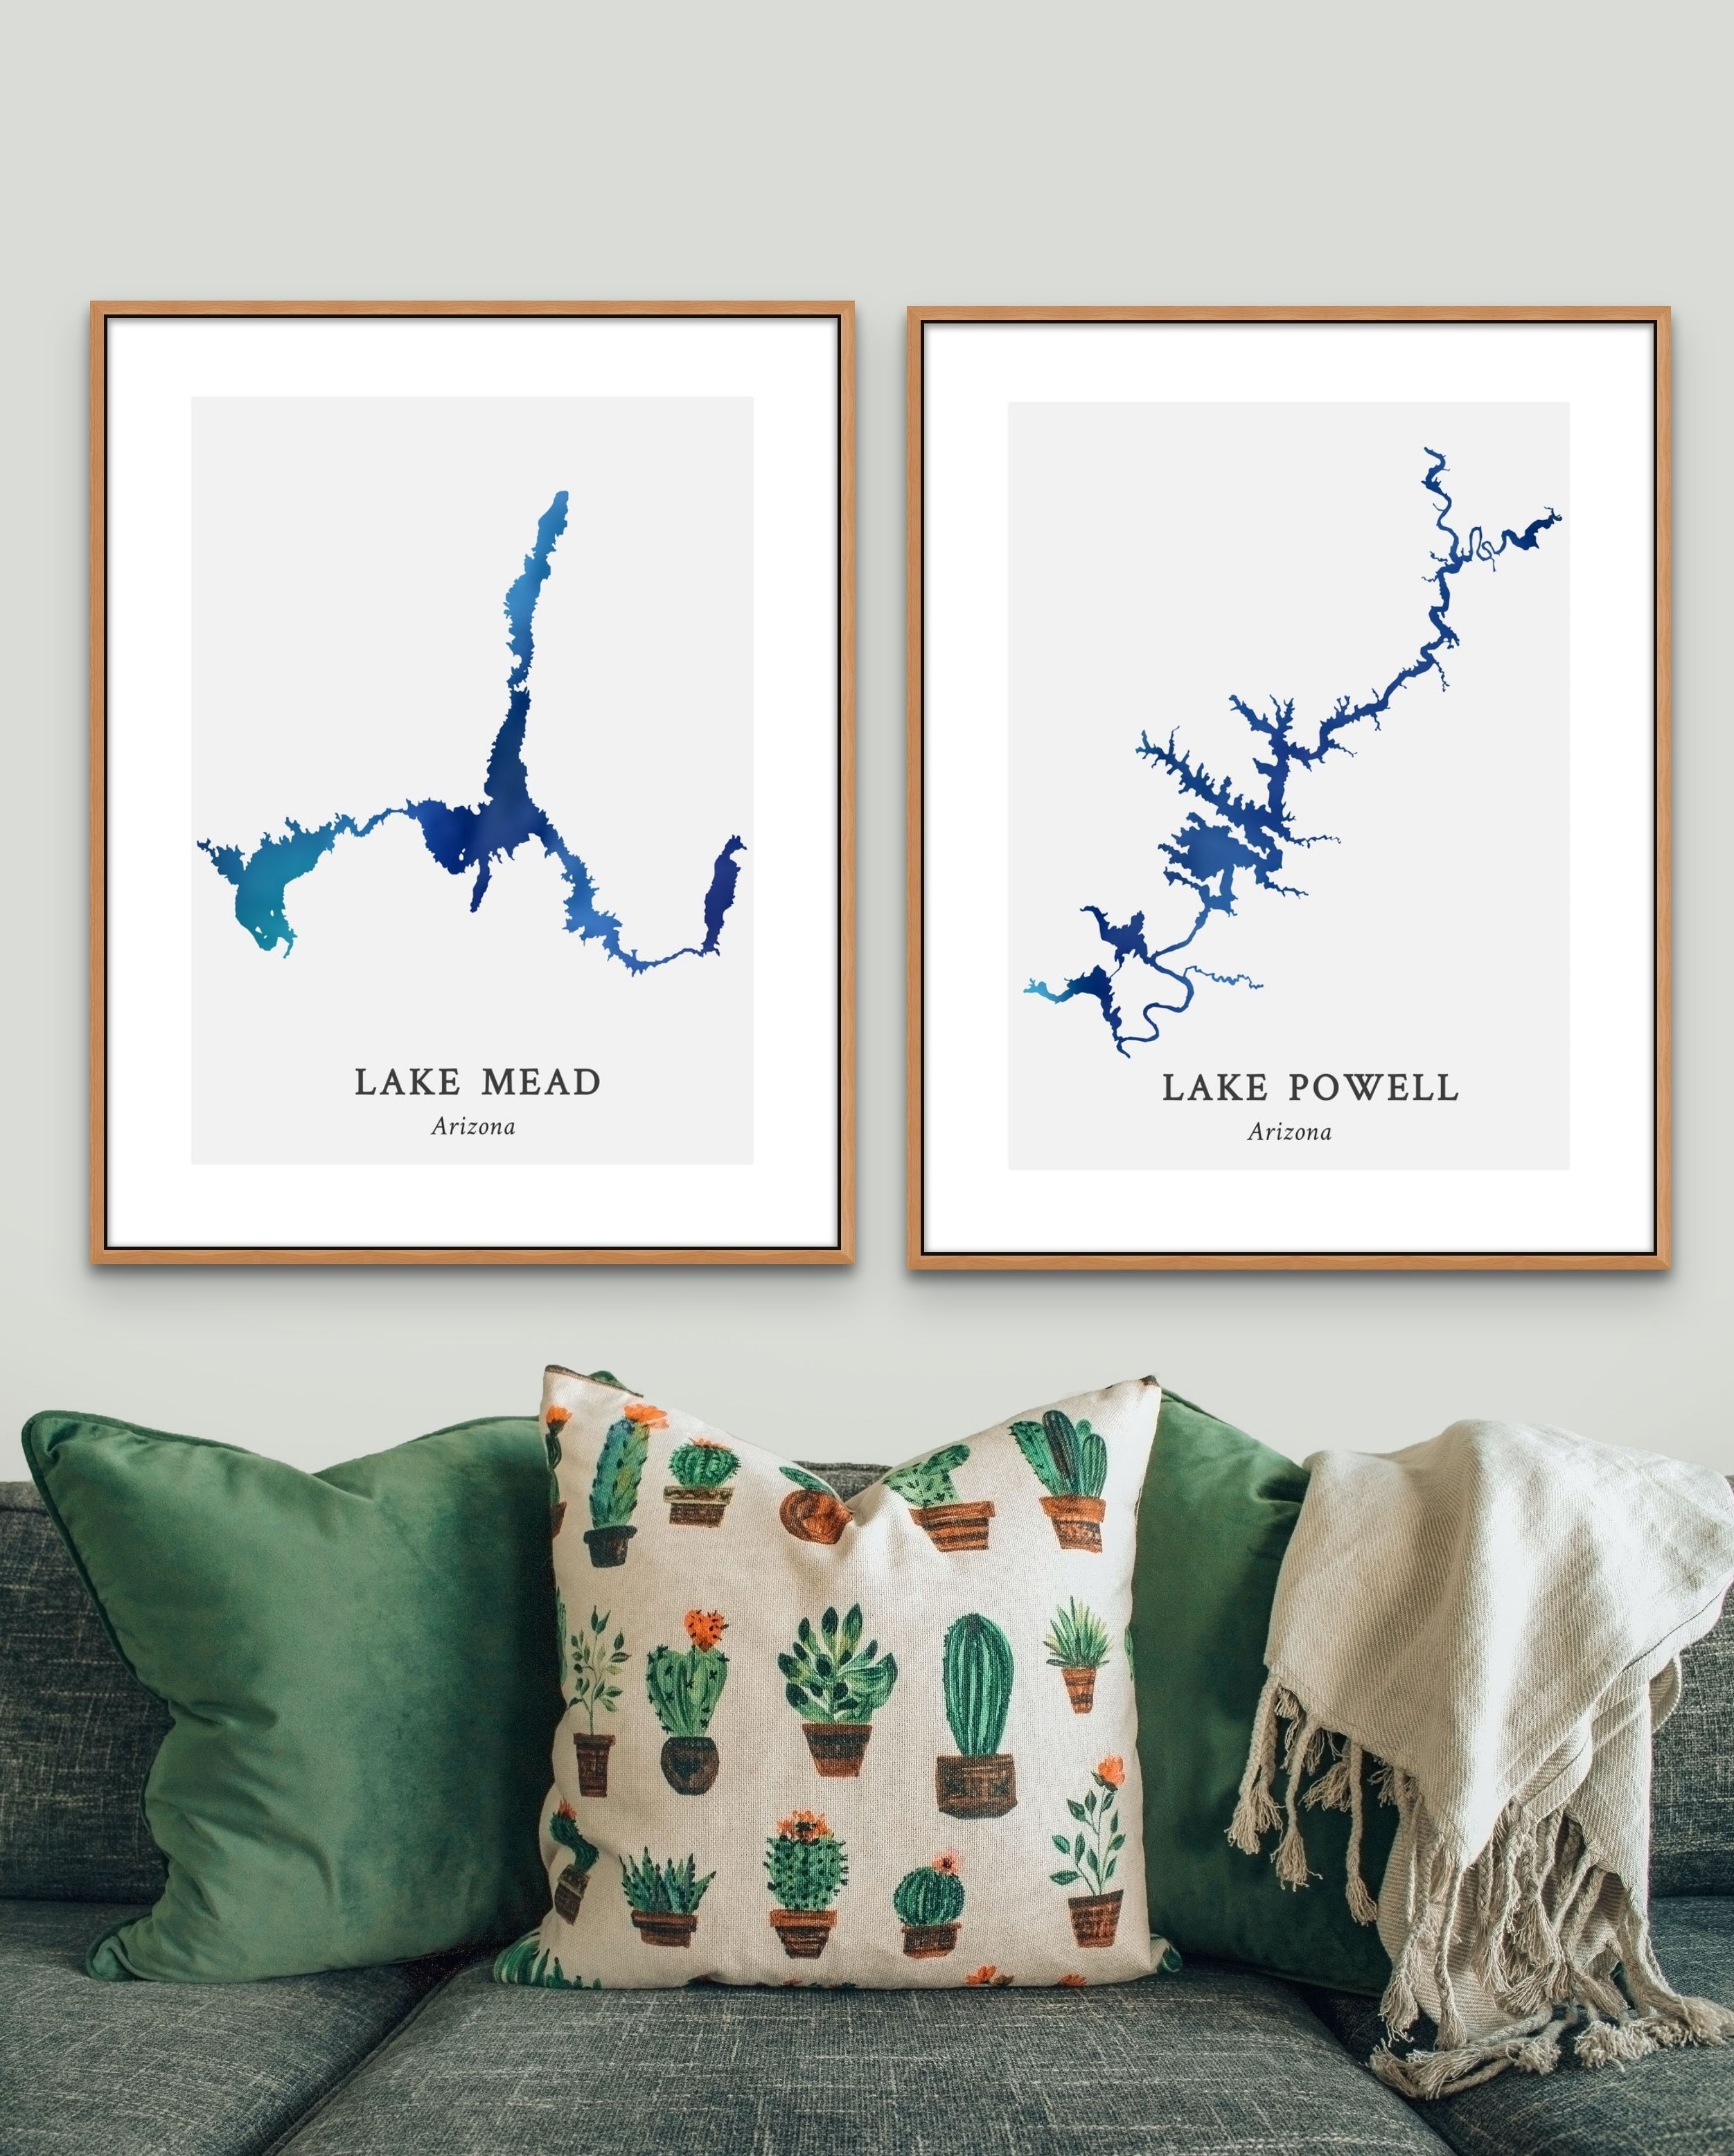 New York - Lake Champlain